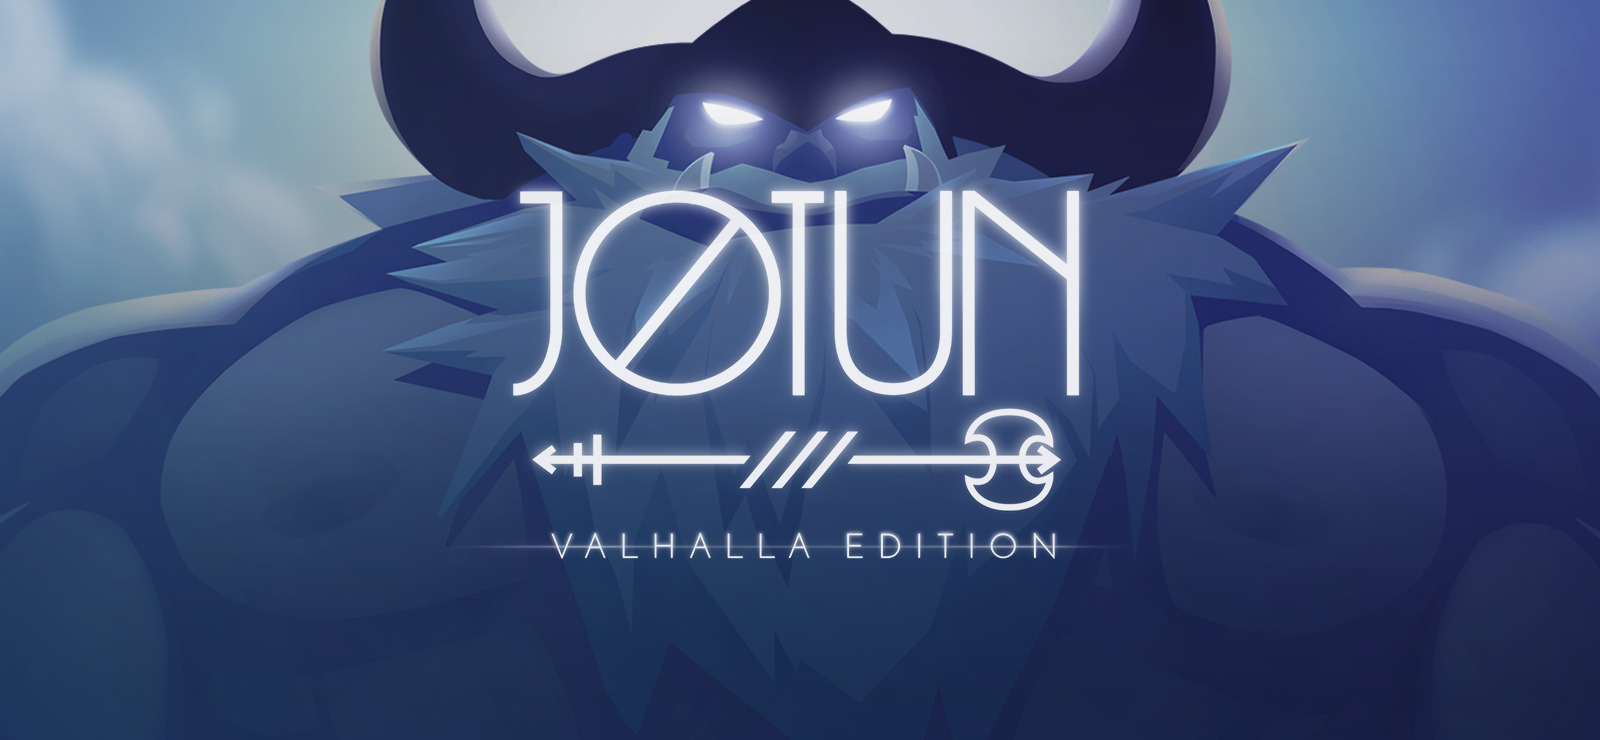 jotun valhalla edition gameplay pc